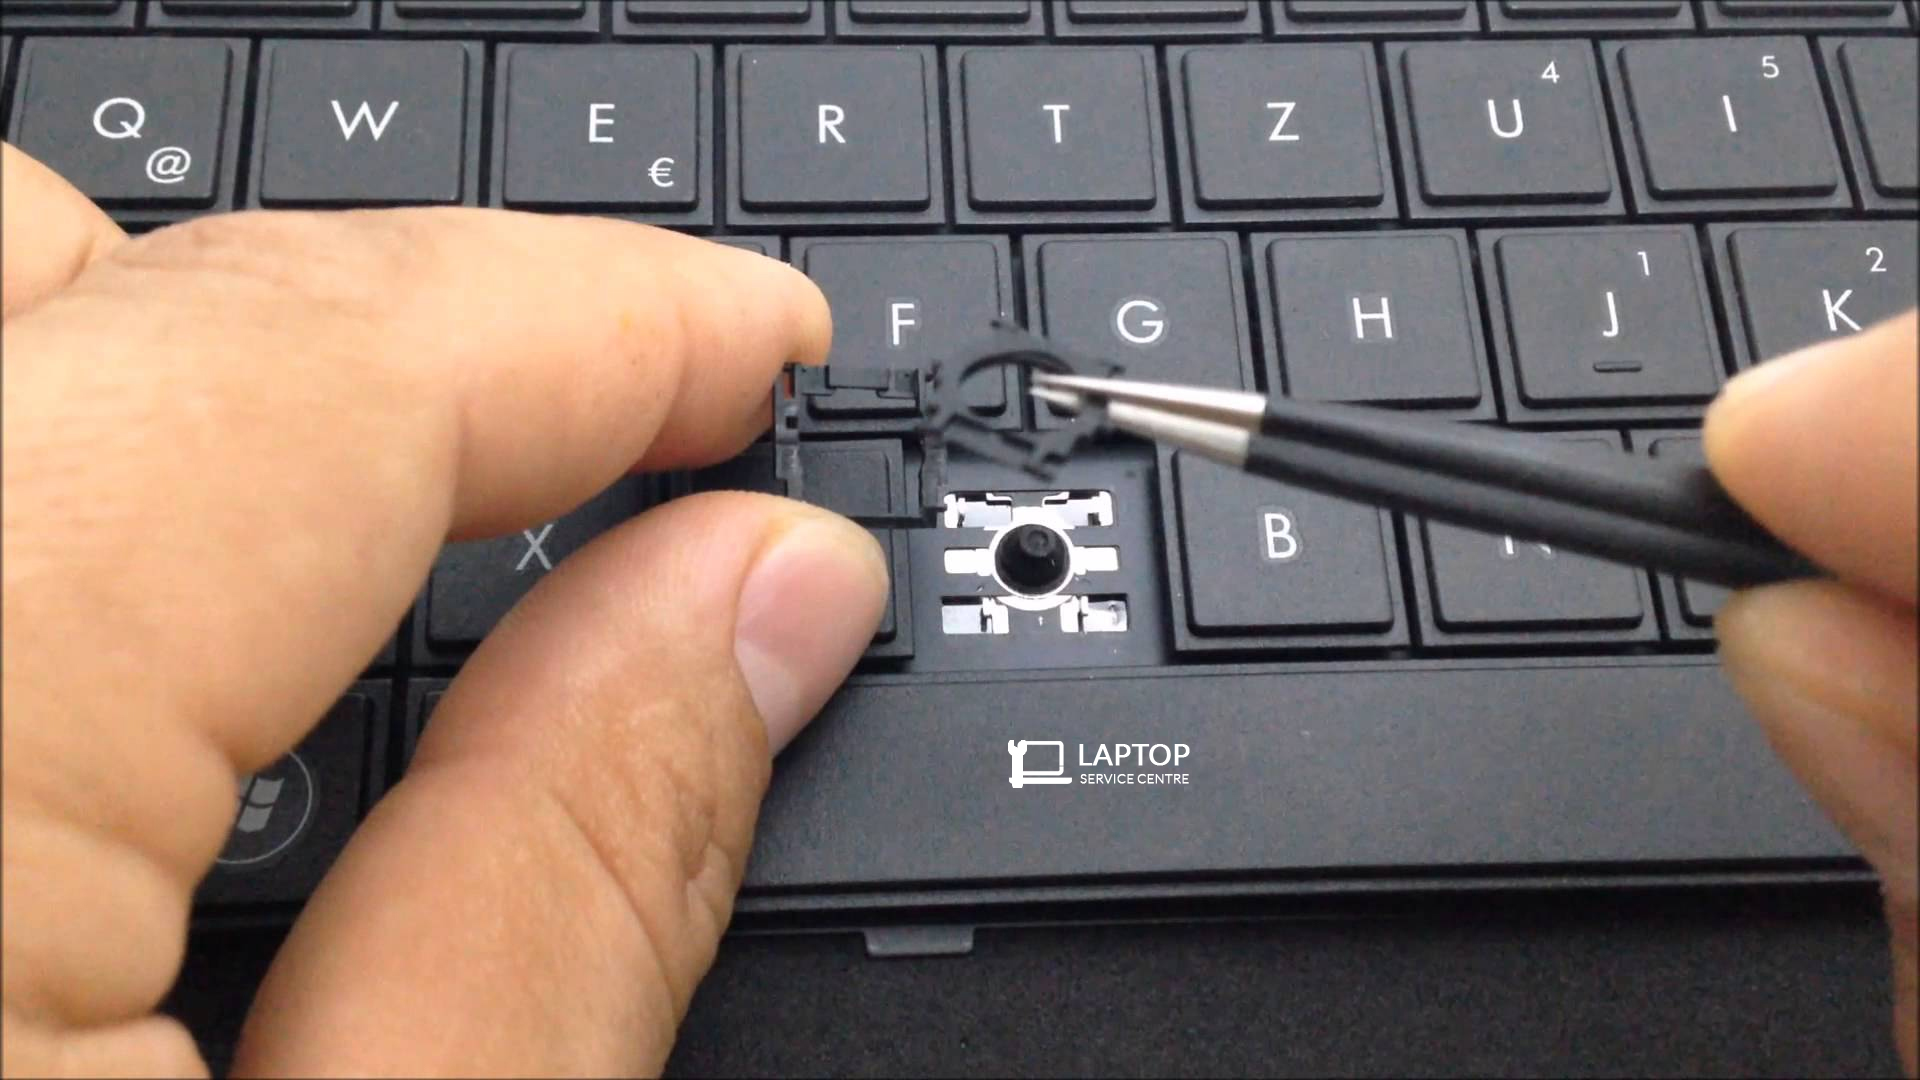 Dell Laptop Keyboard Repair